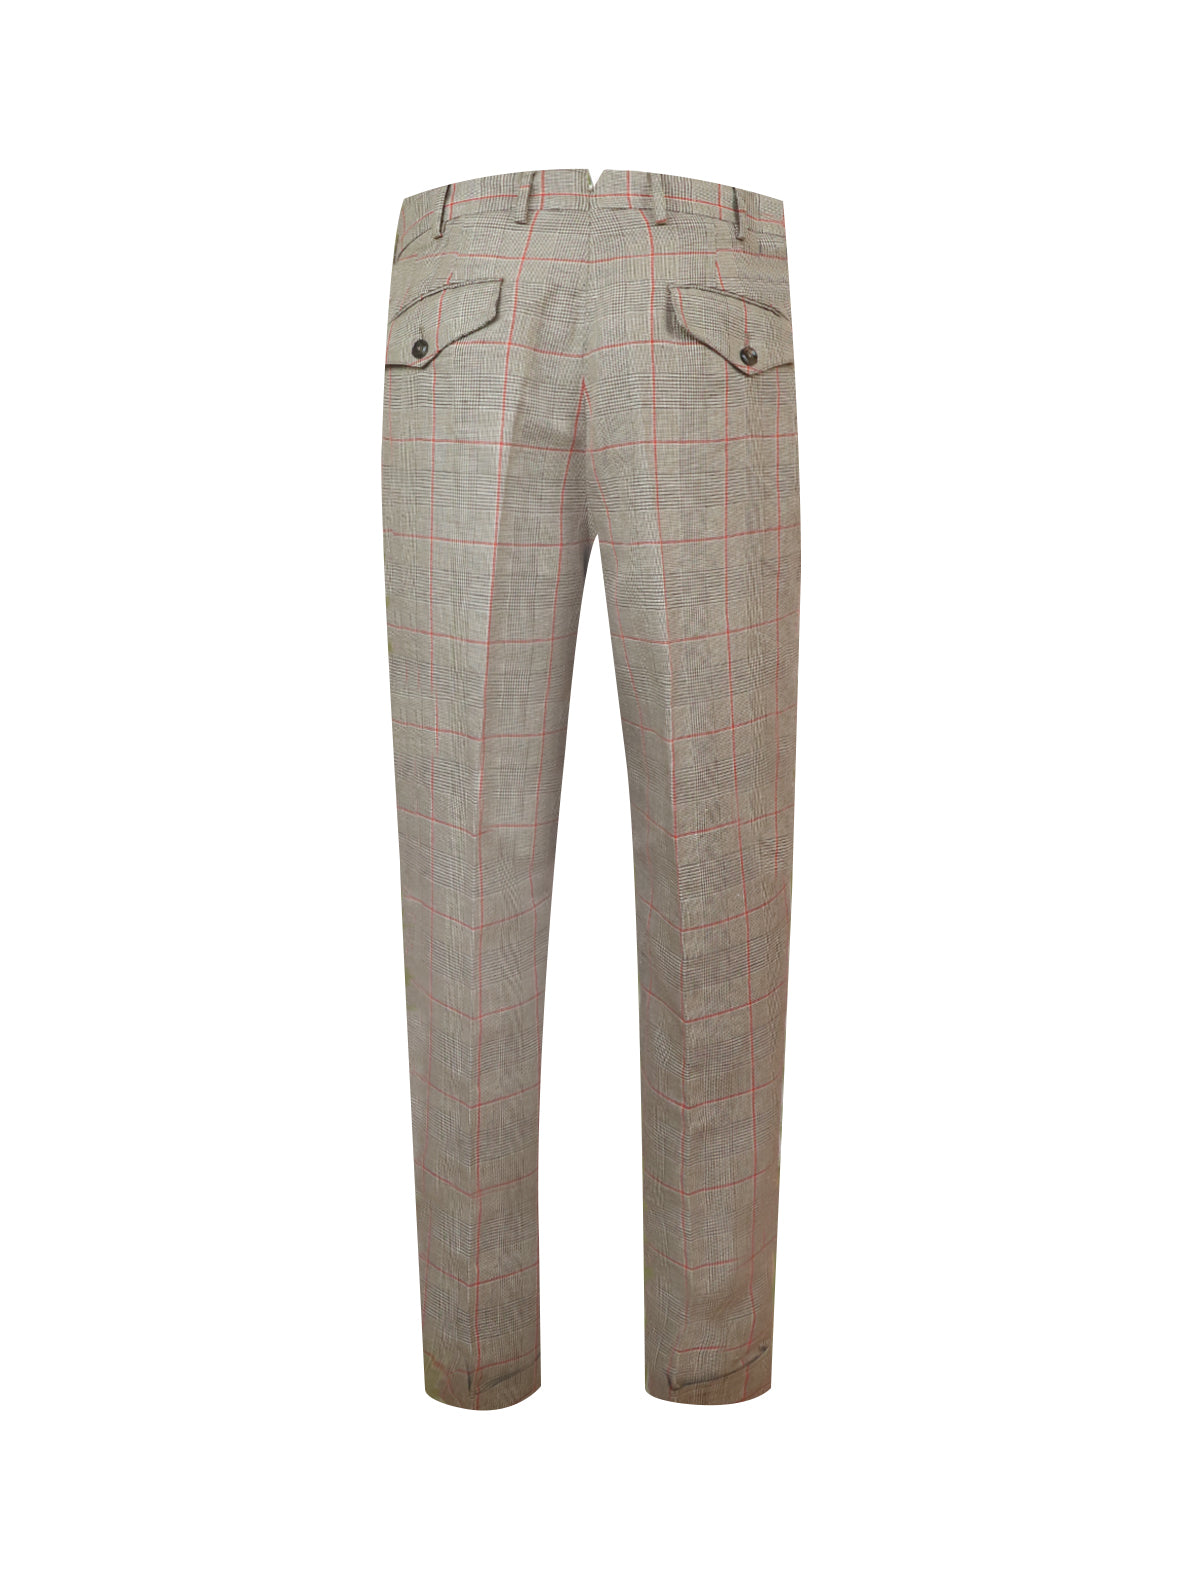 PT Torino Linen-Cotton Pants in Brown Plaid